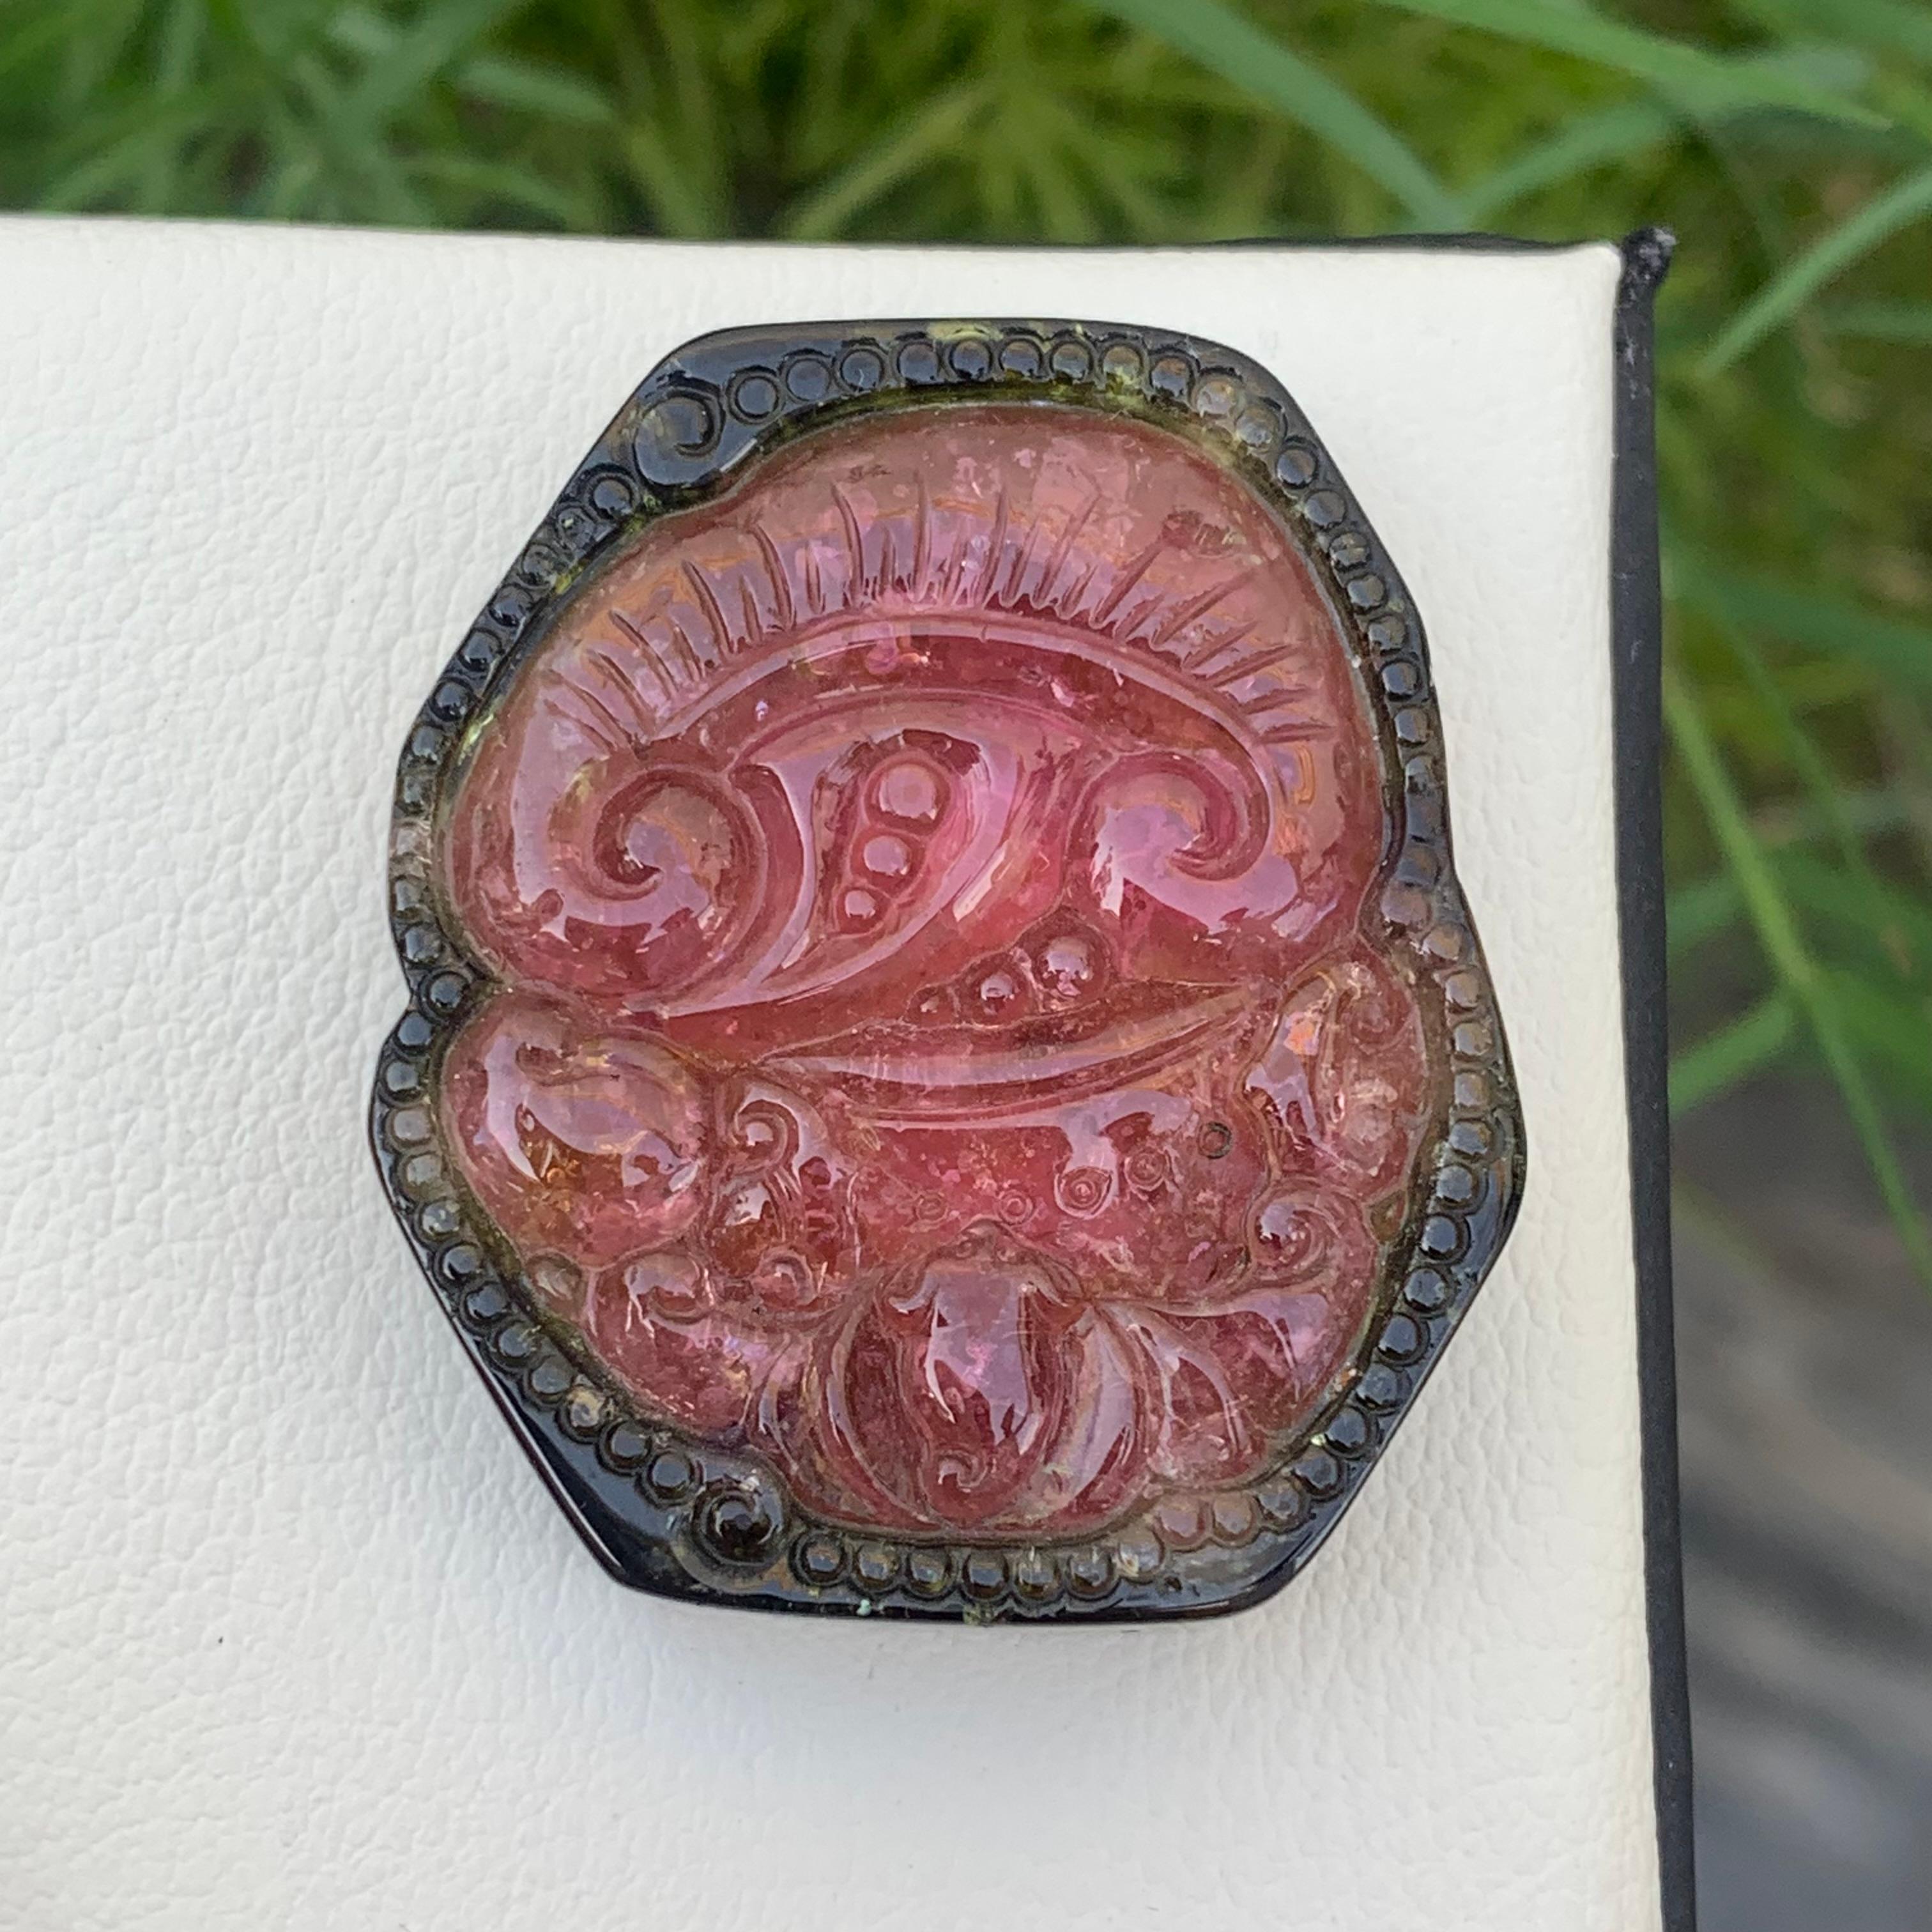 Carved 76.80 Carat Natural Bi Color Drilled Tourmaline Carving Gemstone From Africa For Sale